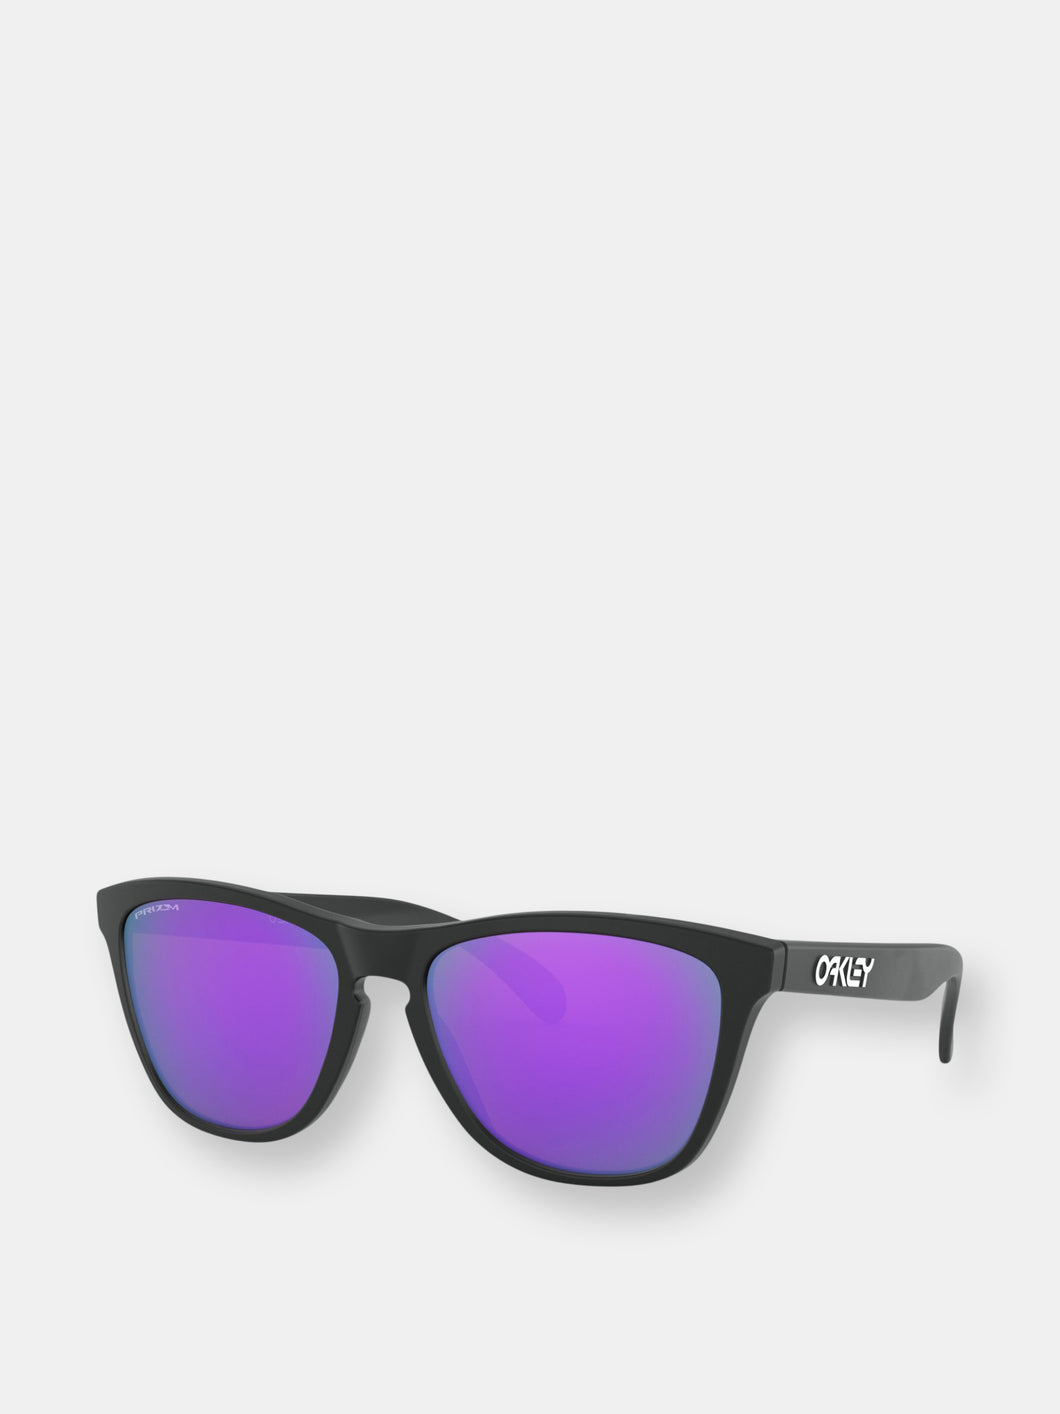 Oakley Men's Polarized Frogskins 0OO9013-9013H655 Black Round Sunglasses